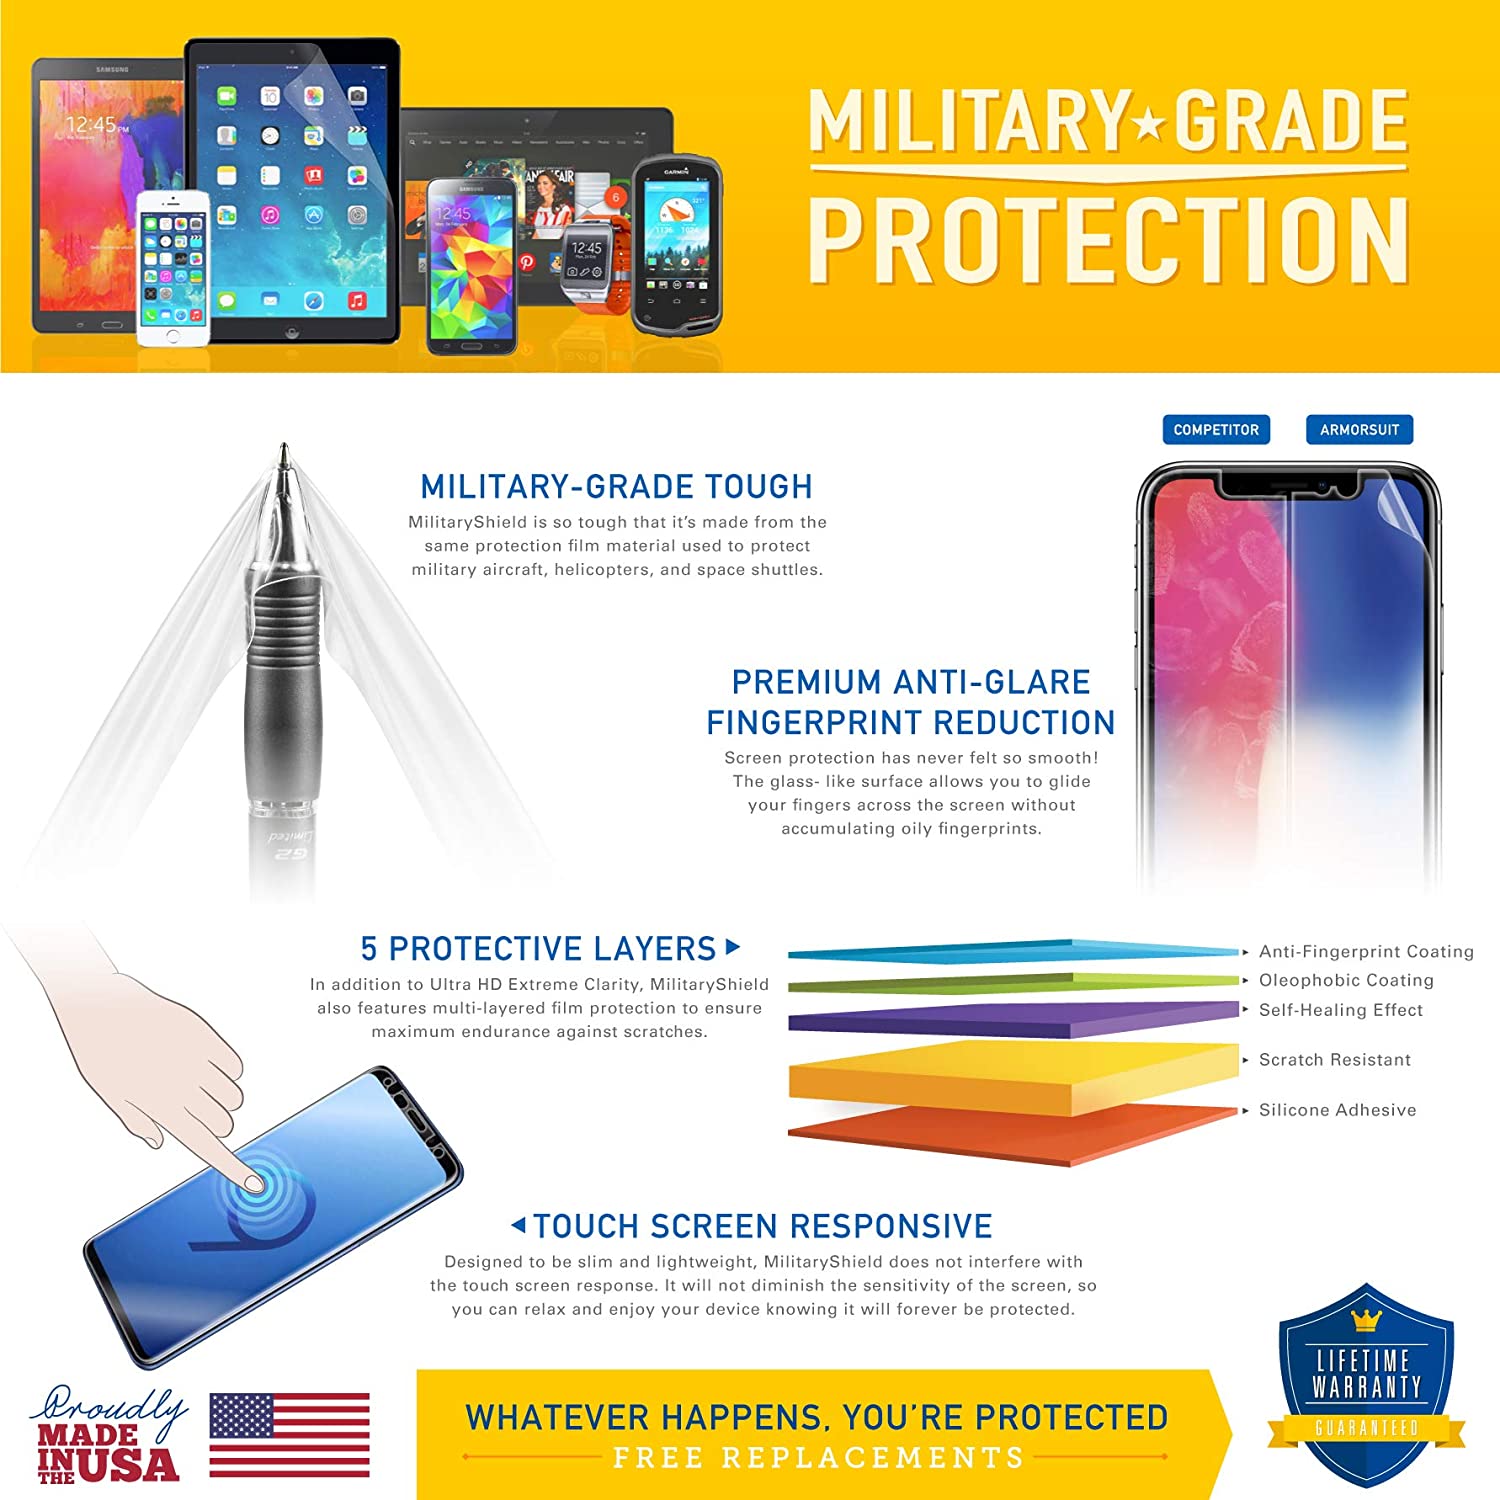 [2-Pack] Samsung Galaxy Note Edge Anti-Glare (Matte) Screen Protector